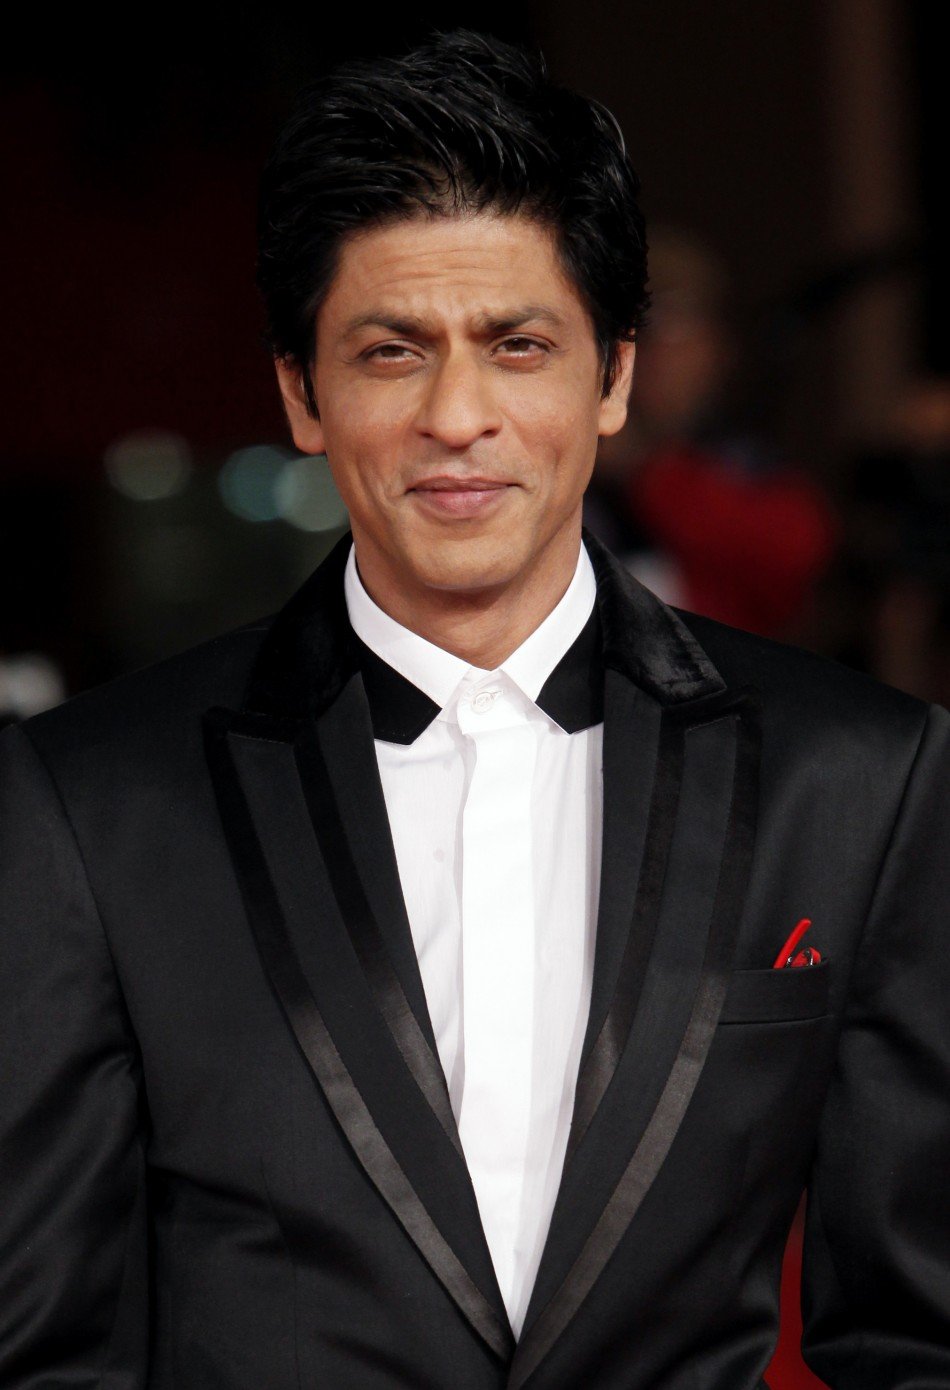 Shah Rukh Khan - Celebrity Image Management